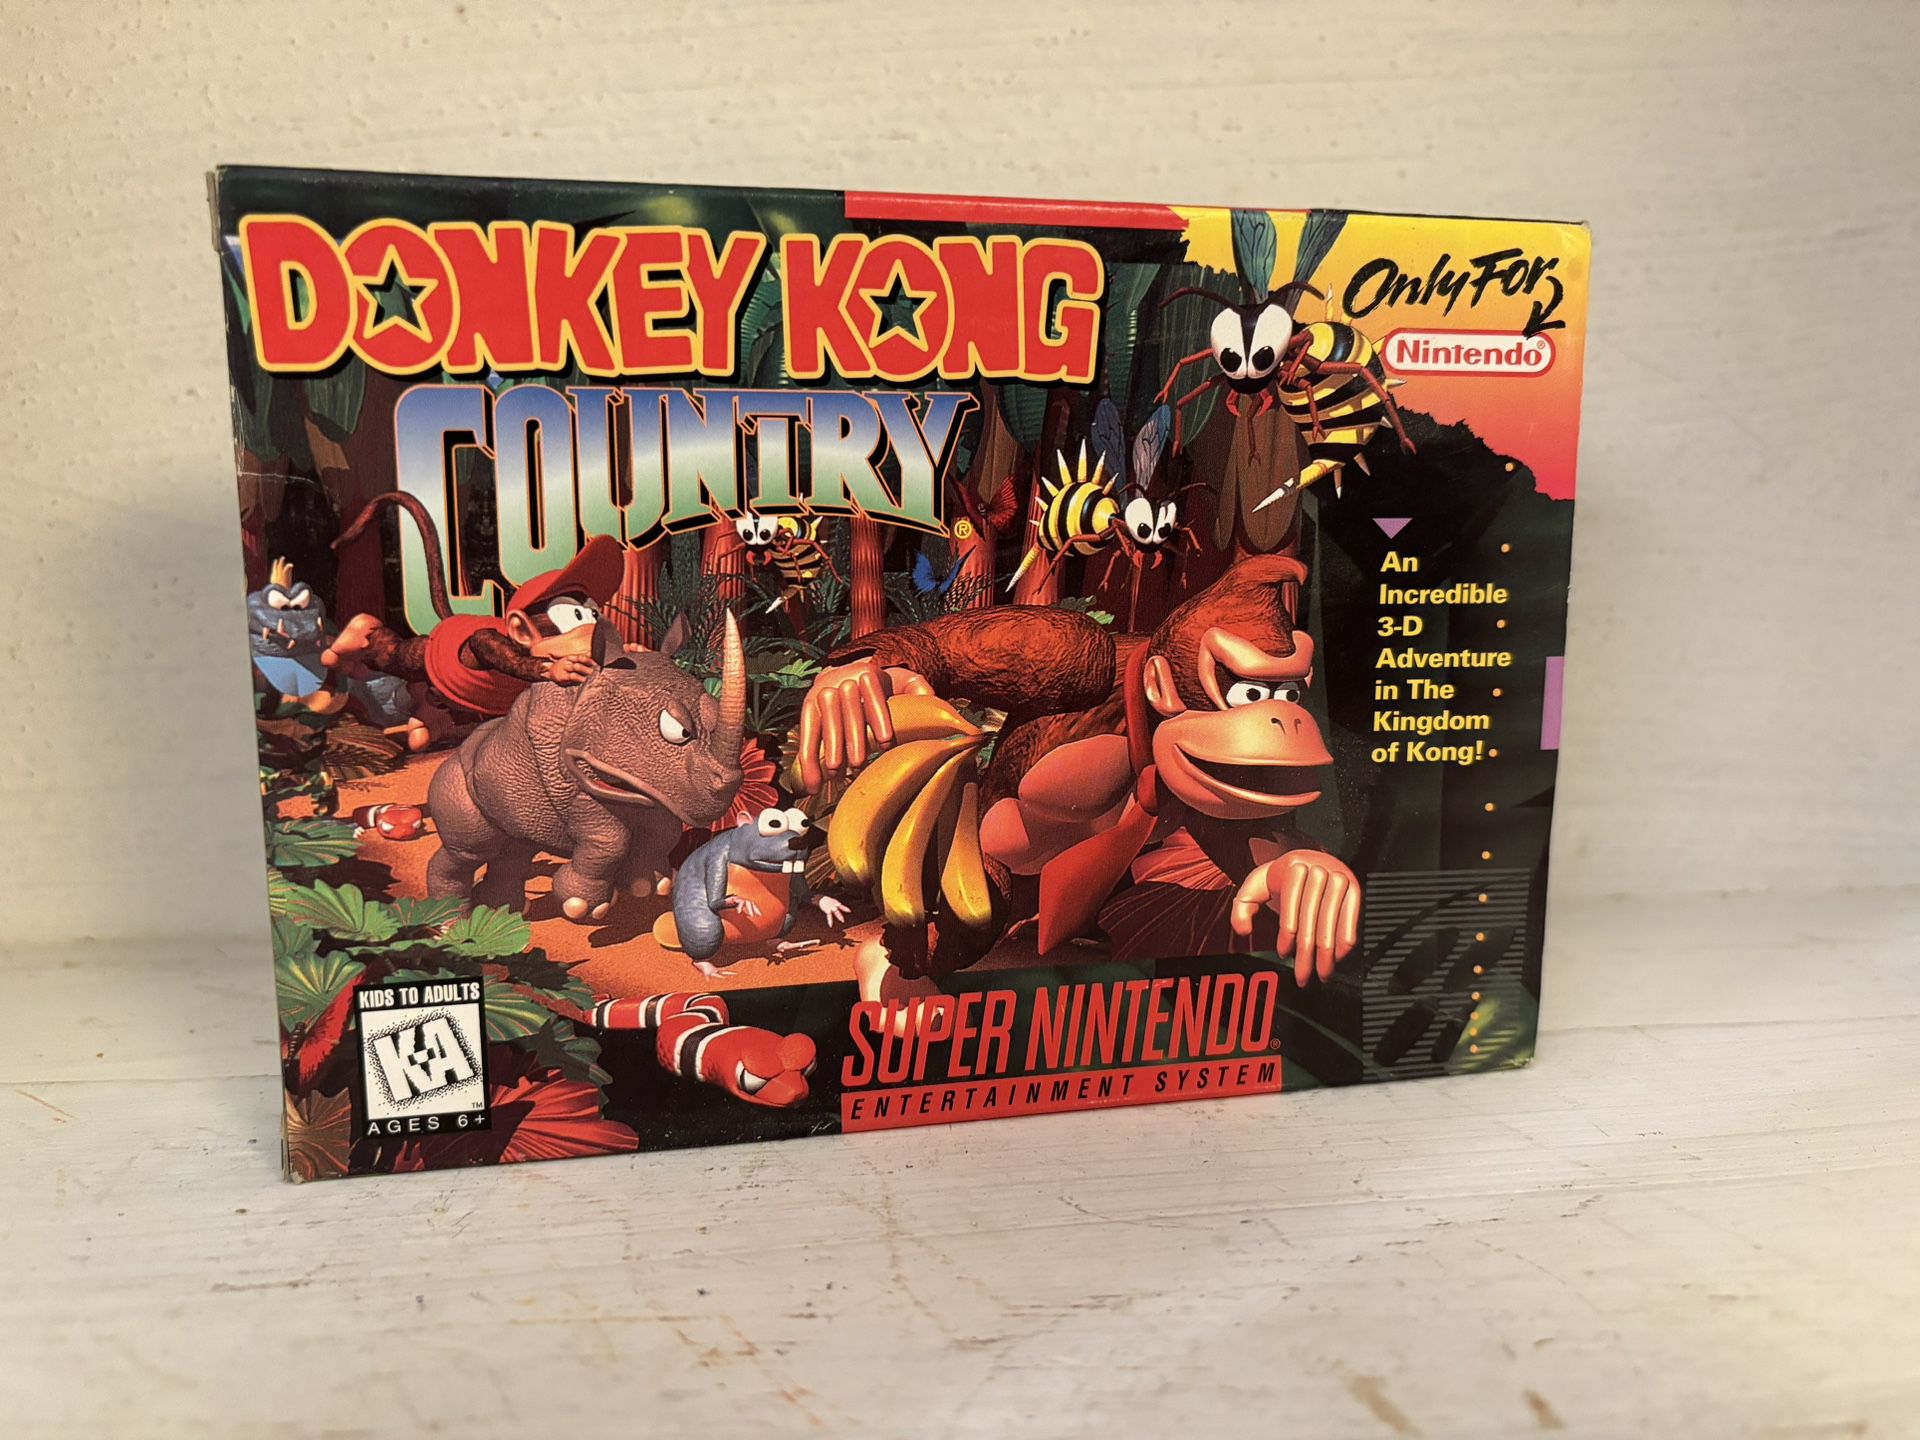 Super Nintendo Donkey Kong Country 